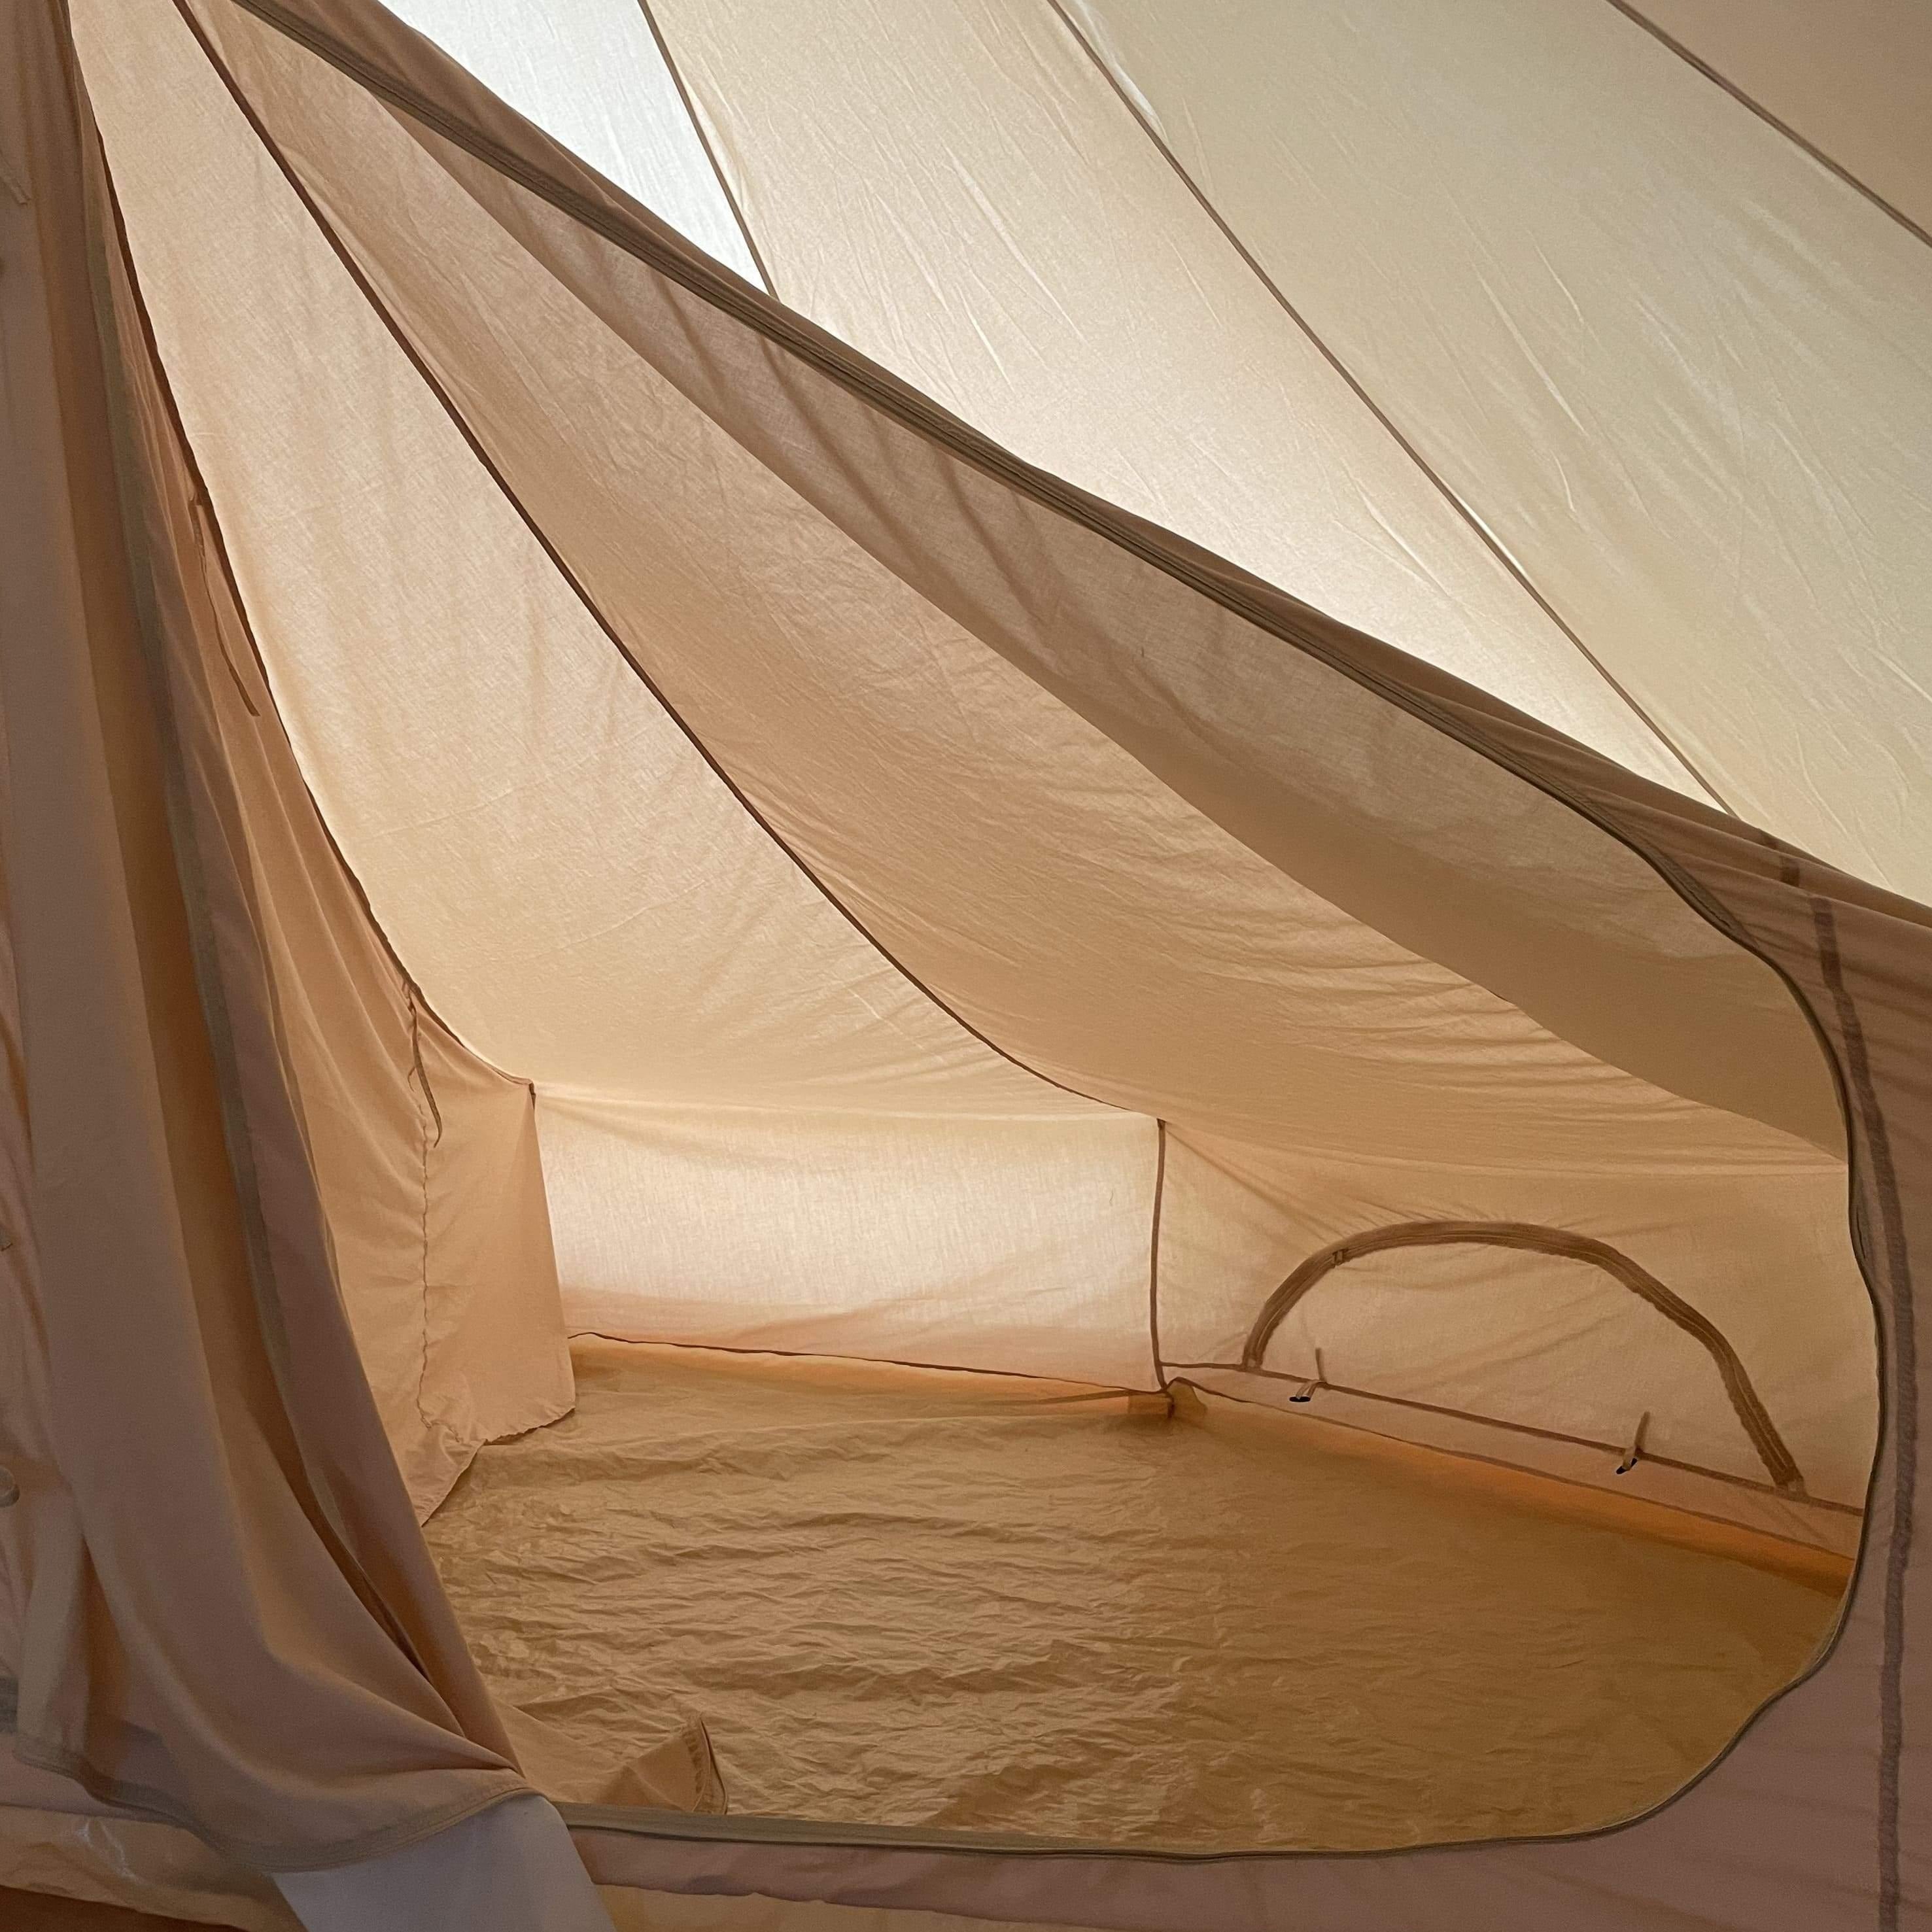 5m Bell Tent Fireproof - Bell Tent Sussex